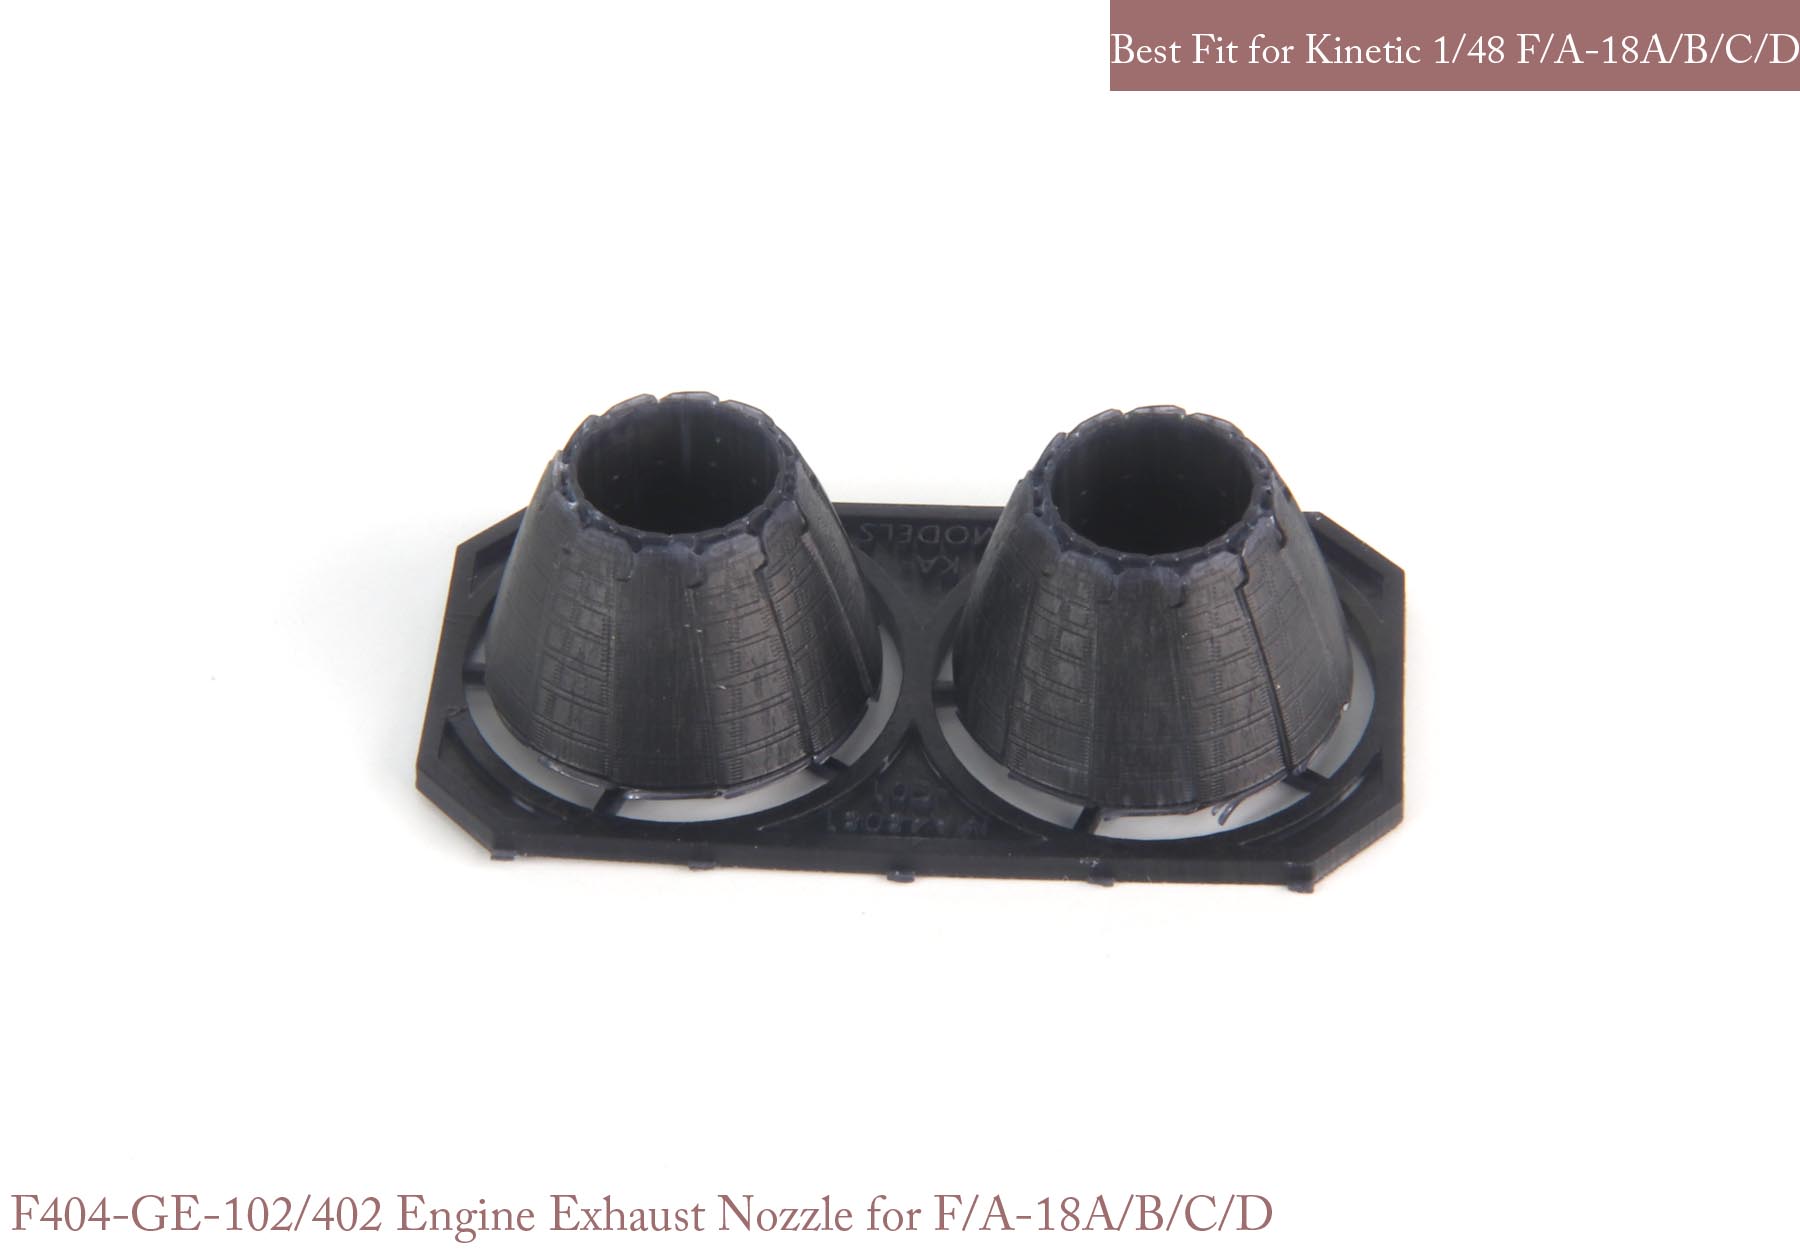 1/48 F/A-18A/B/C/D Nozzle & Burner Set (Closed) for Kinetic - Click Image to Close